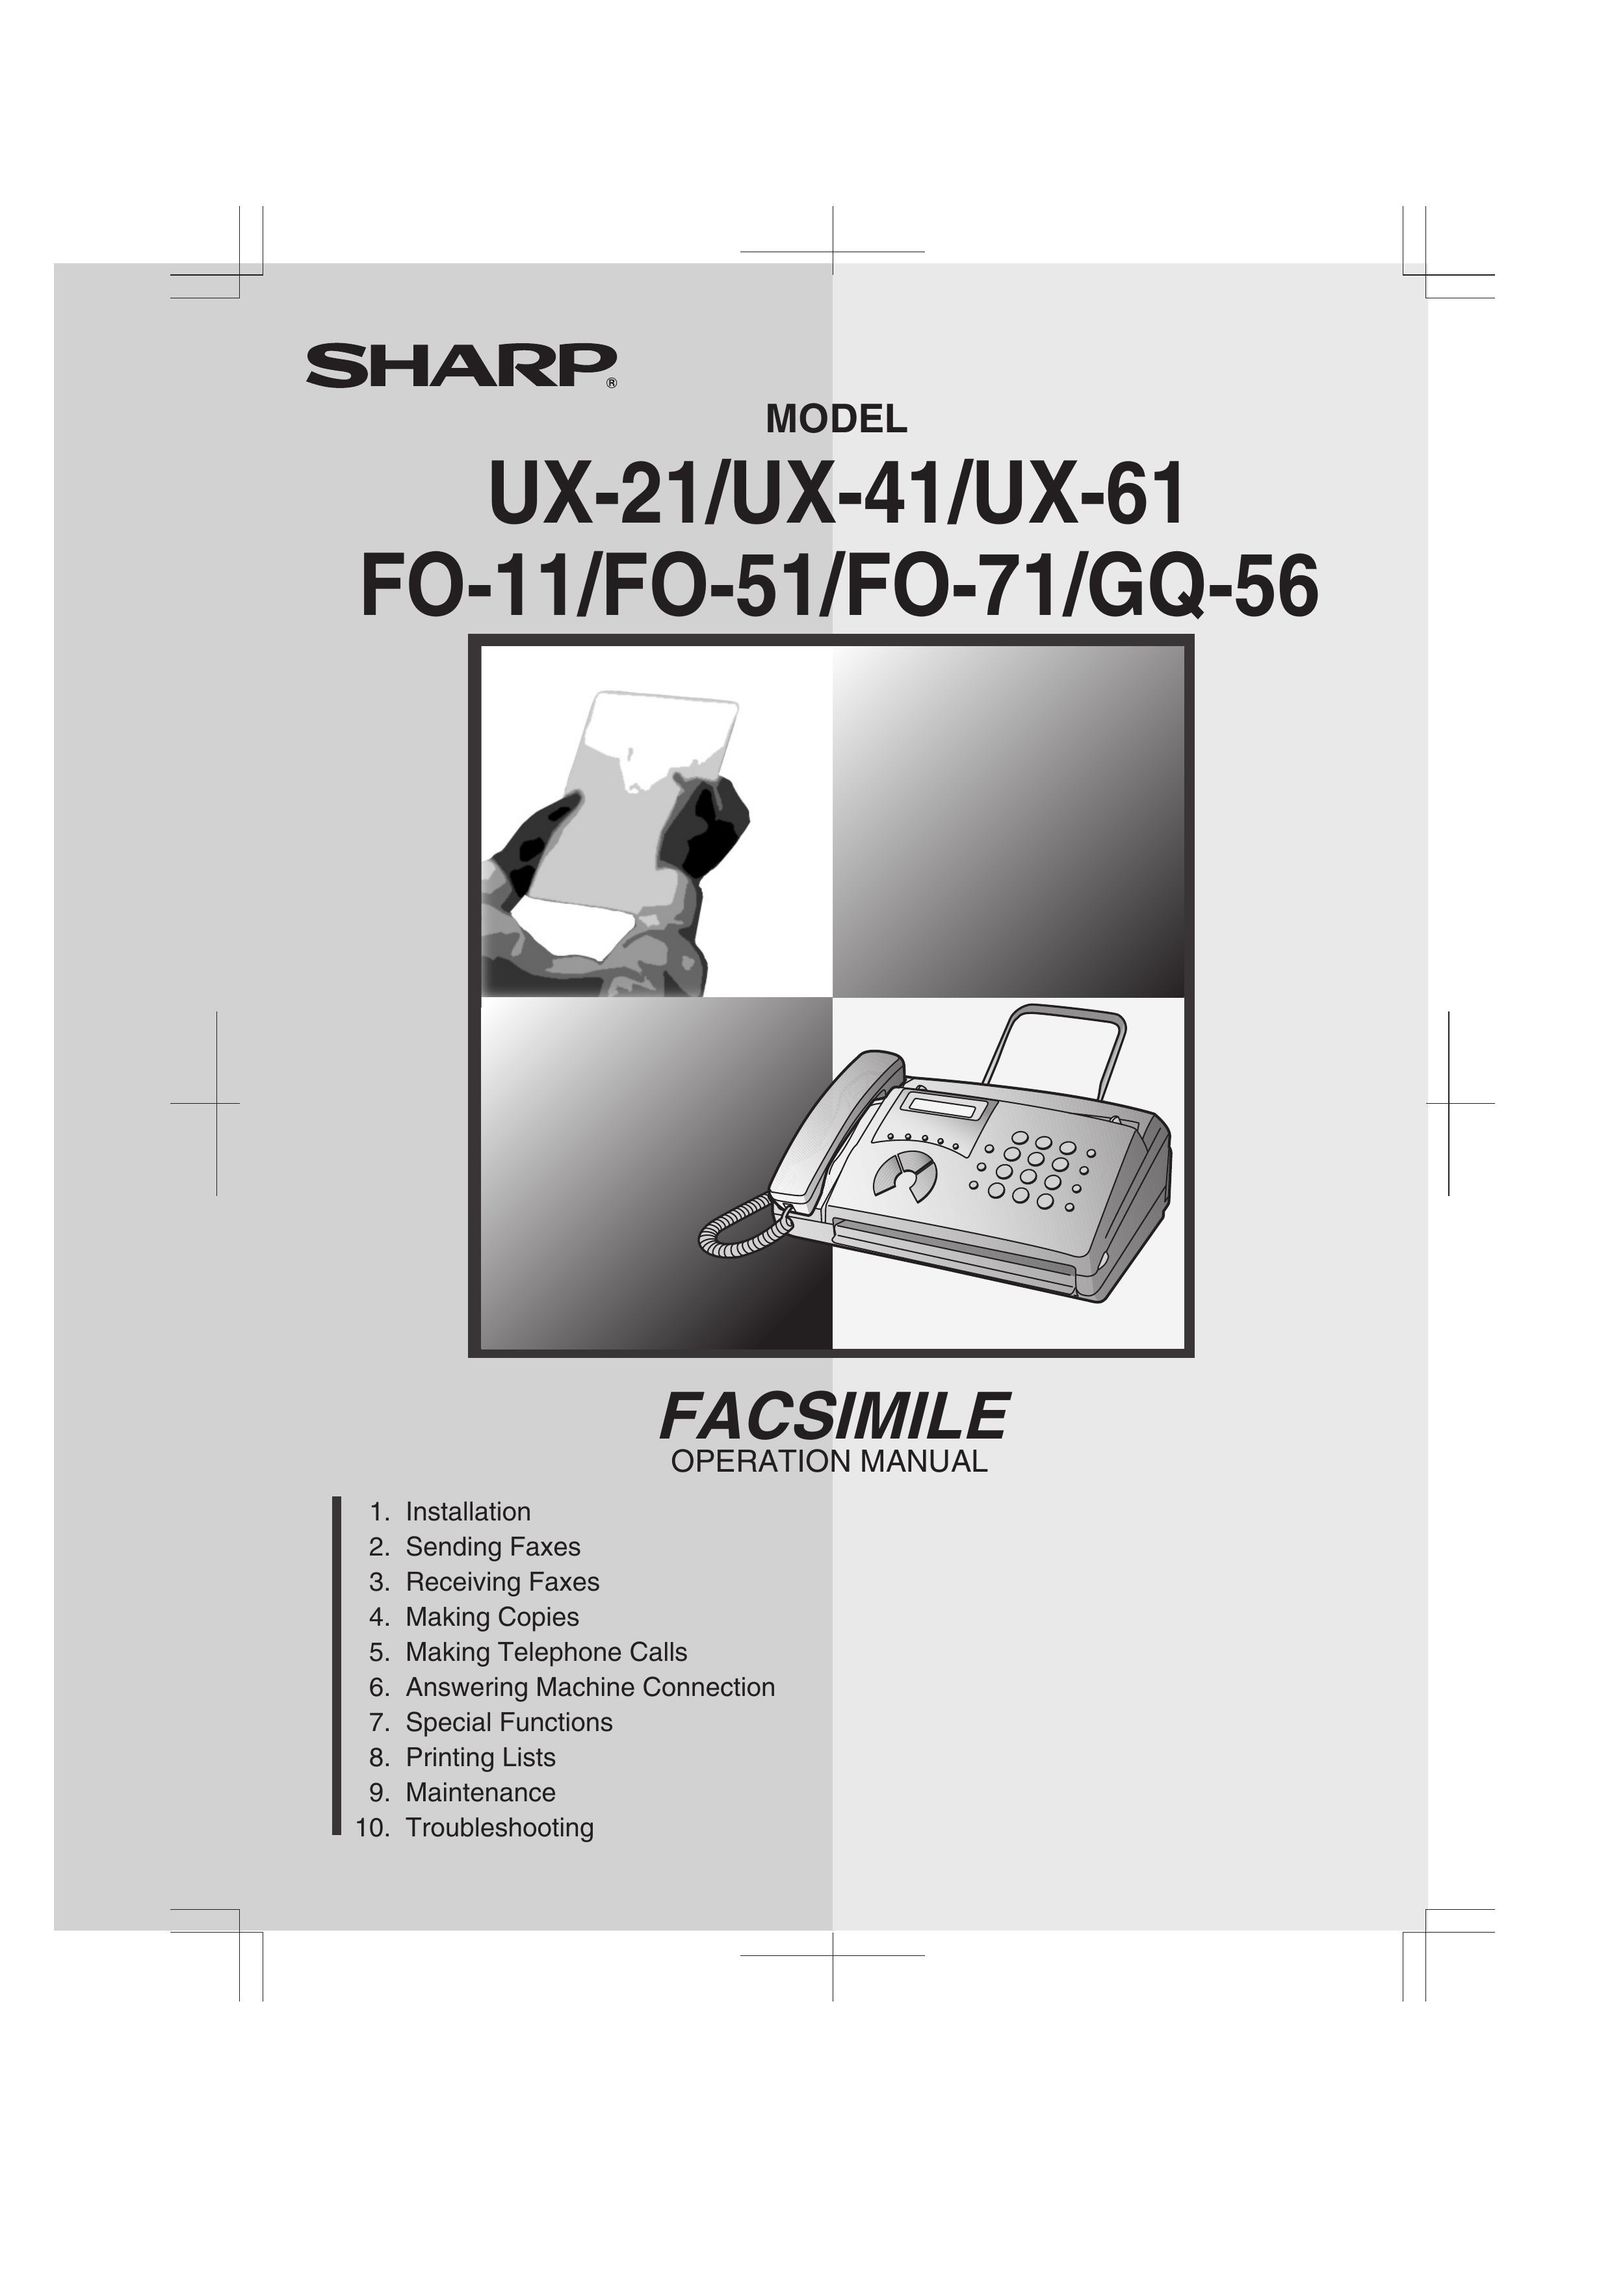 Sharp FO-71 Fax Machine User Manual